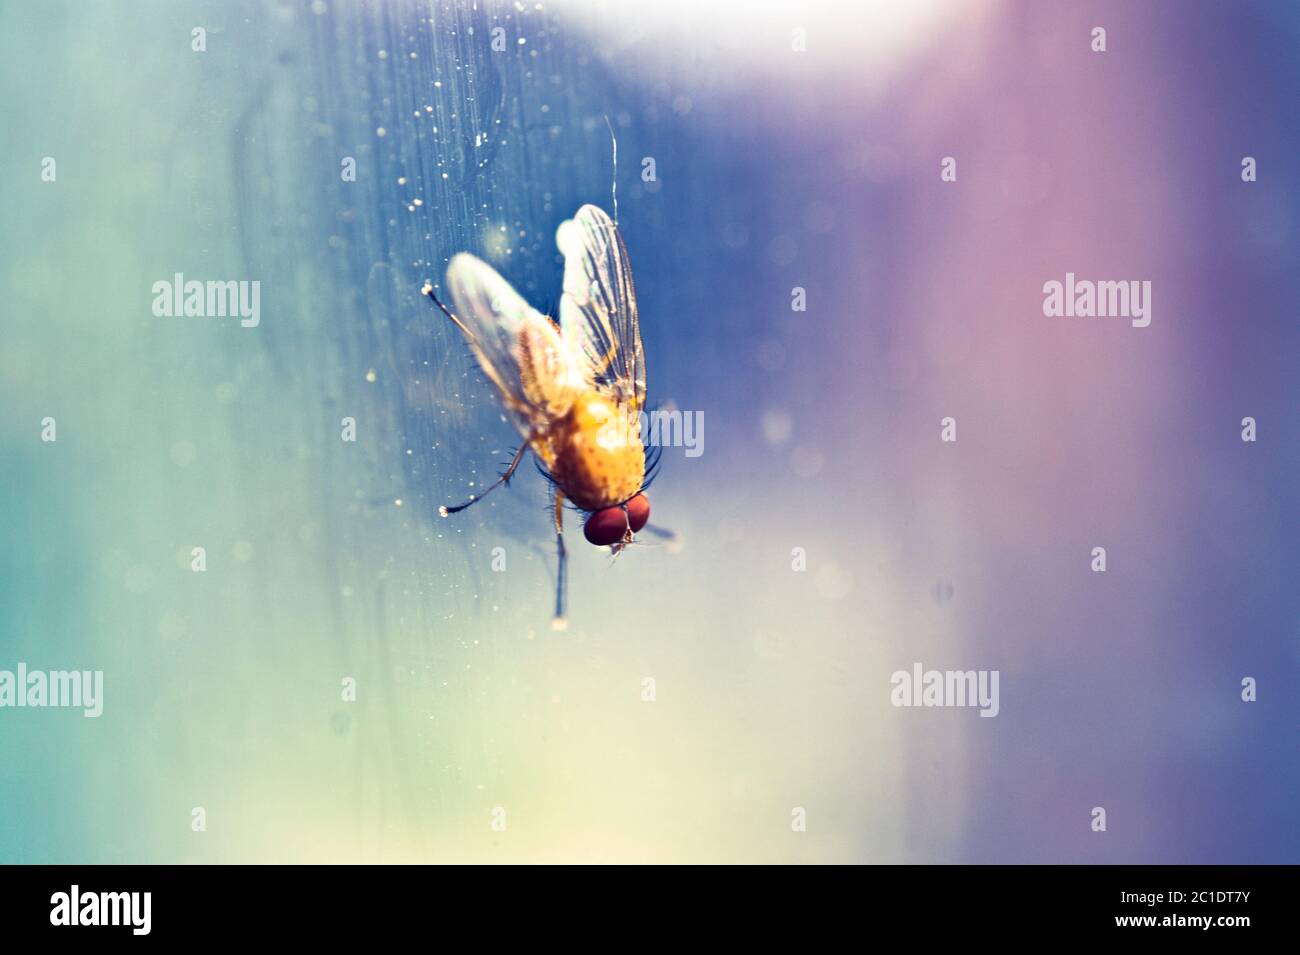 Camptoprosopella fly on a window Stock Photo